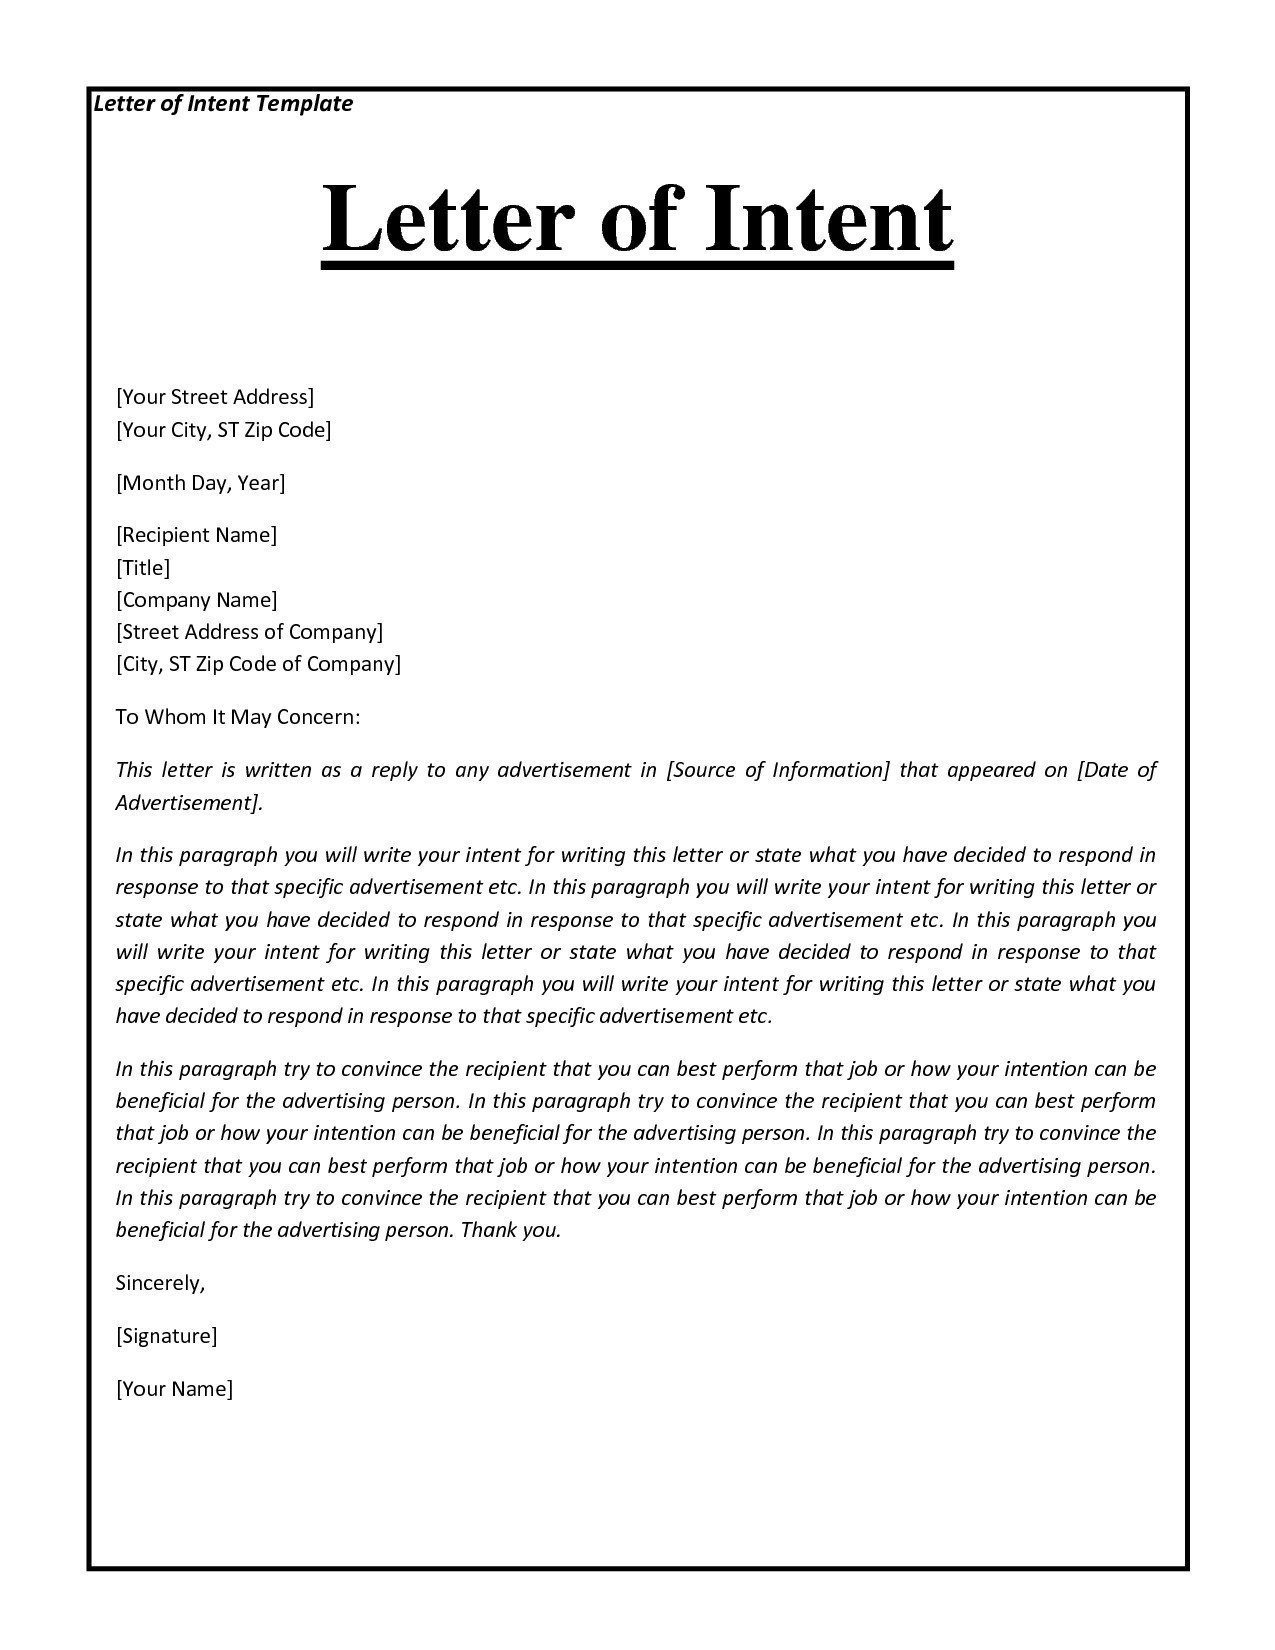 Letter Of Interest Template Pdf - Letter Intent Job Template Inspirationa Letter Intent Job Sample